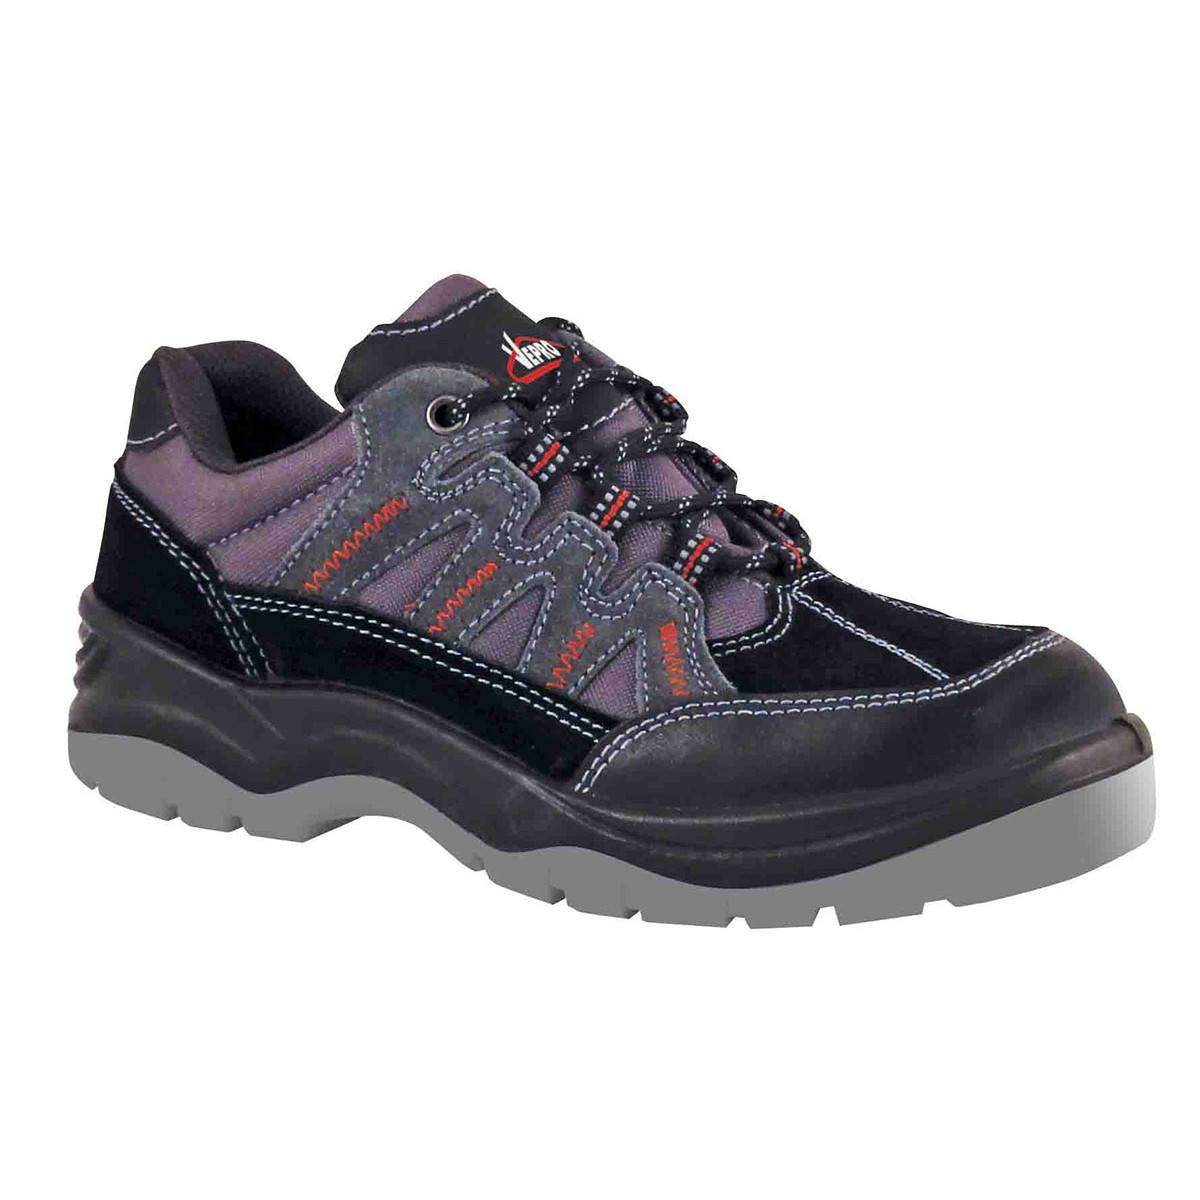 SPA safety shoes size 45, grey black